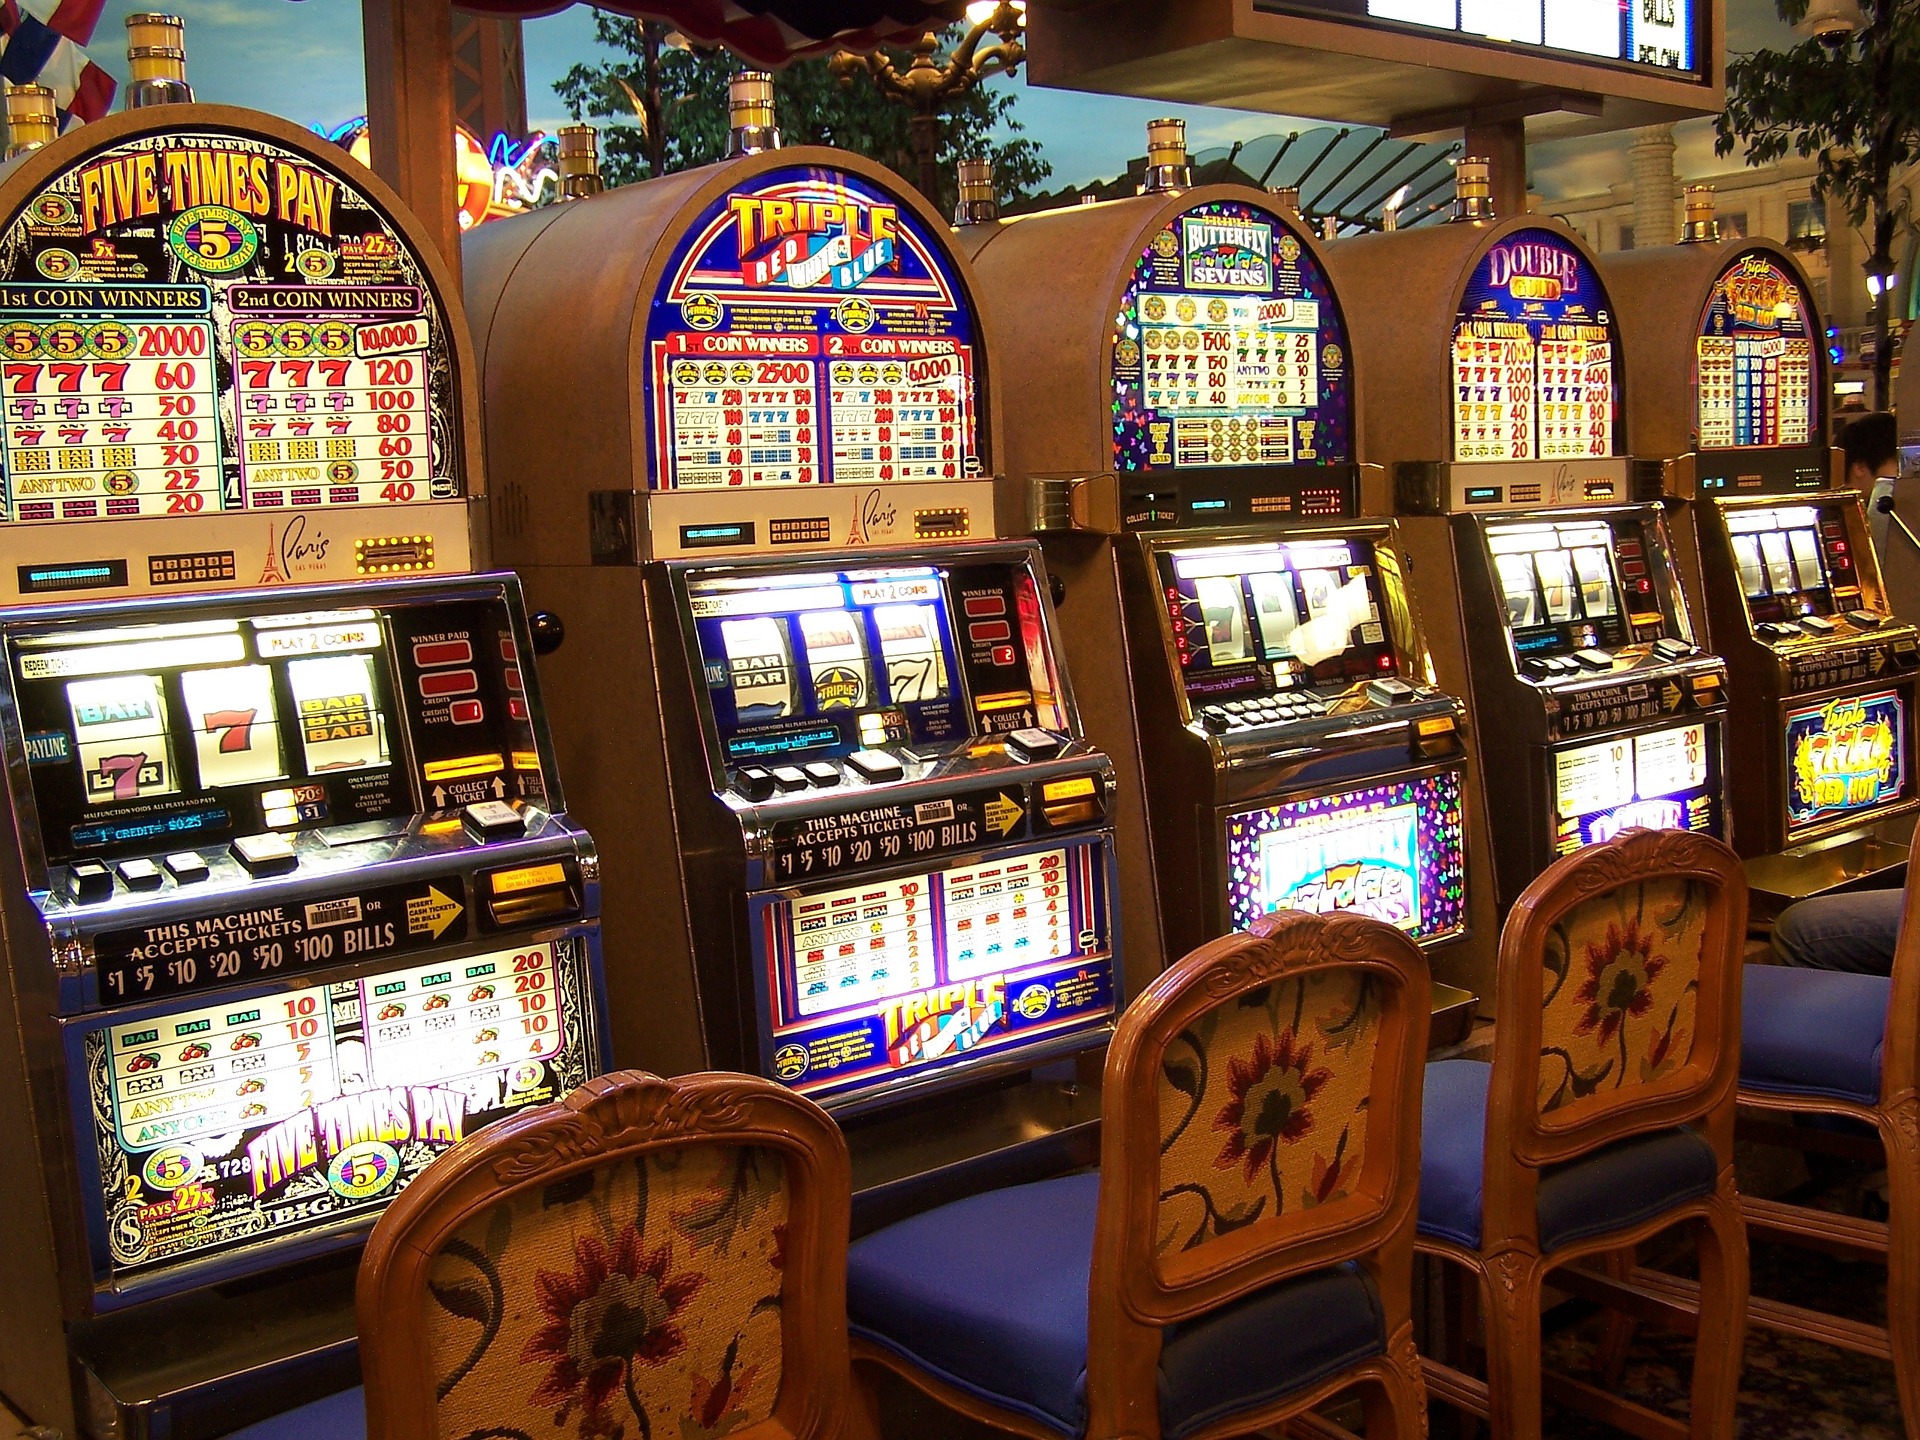  Crypto Casino Games & Casino Slot Games - Crypto Gambling